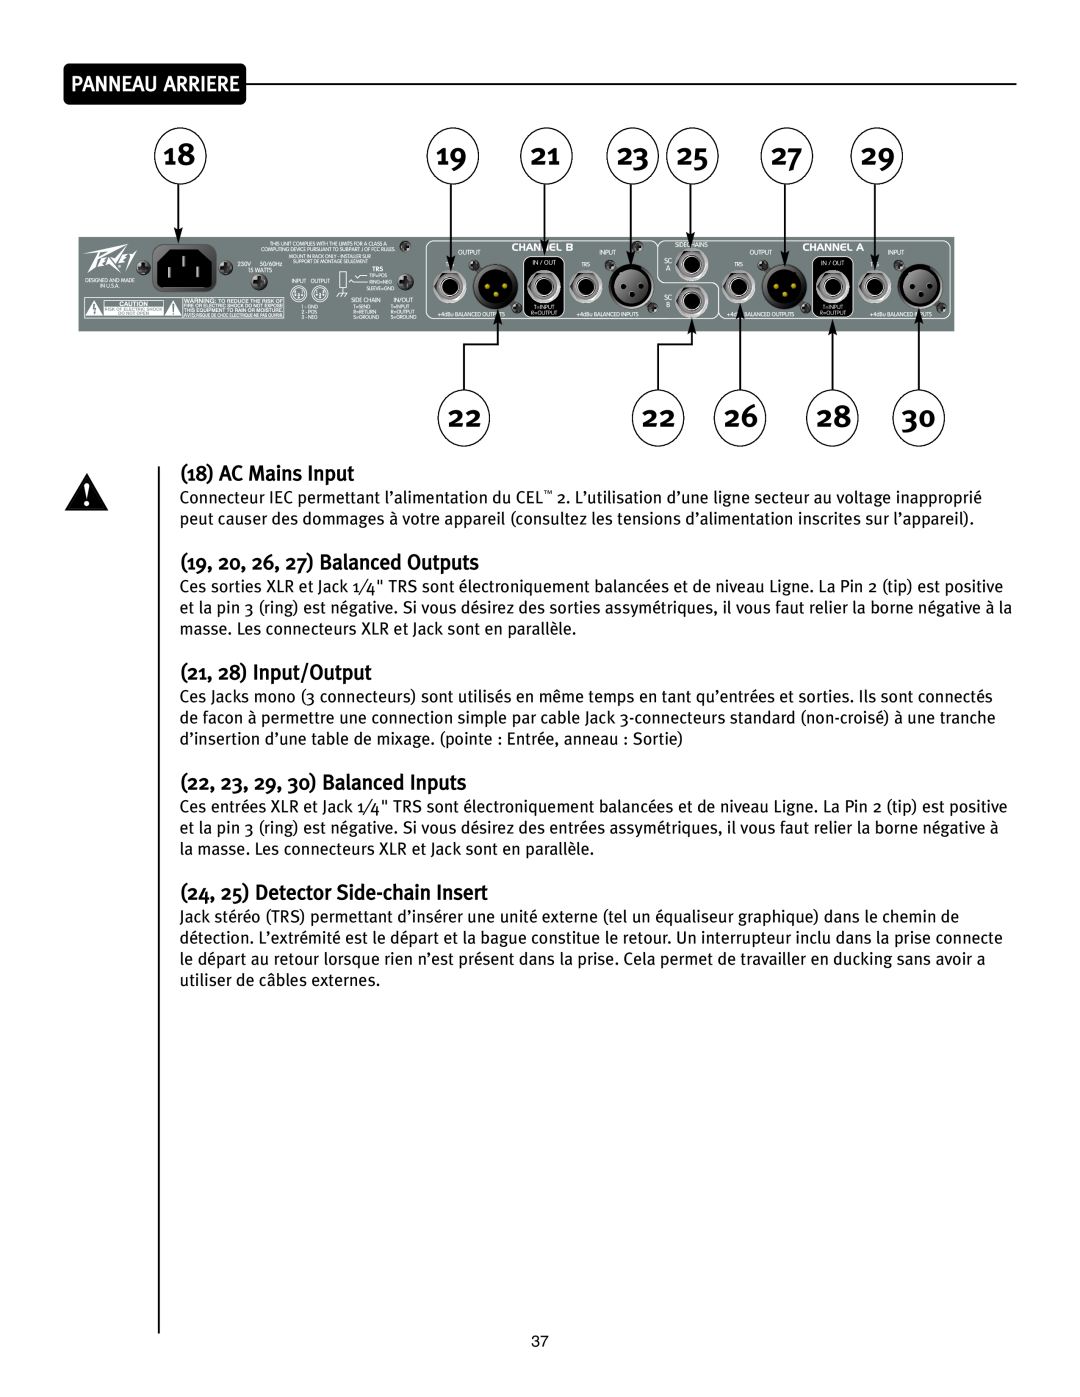 Peavey CEL-2A manual Panneau Arriere, AC Mains Input, 19‚ 20‚ 26‚ 27 Balanced Outputs, 21‚ 28 Input/Output 